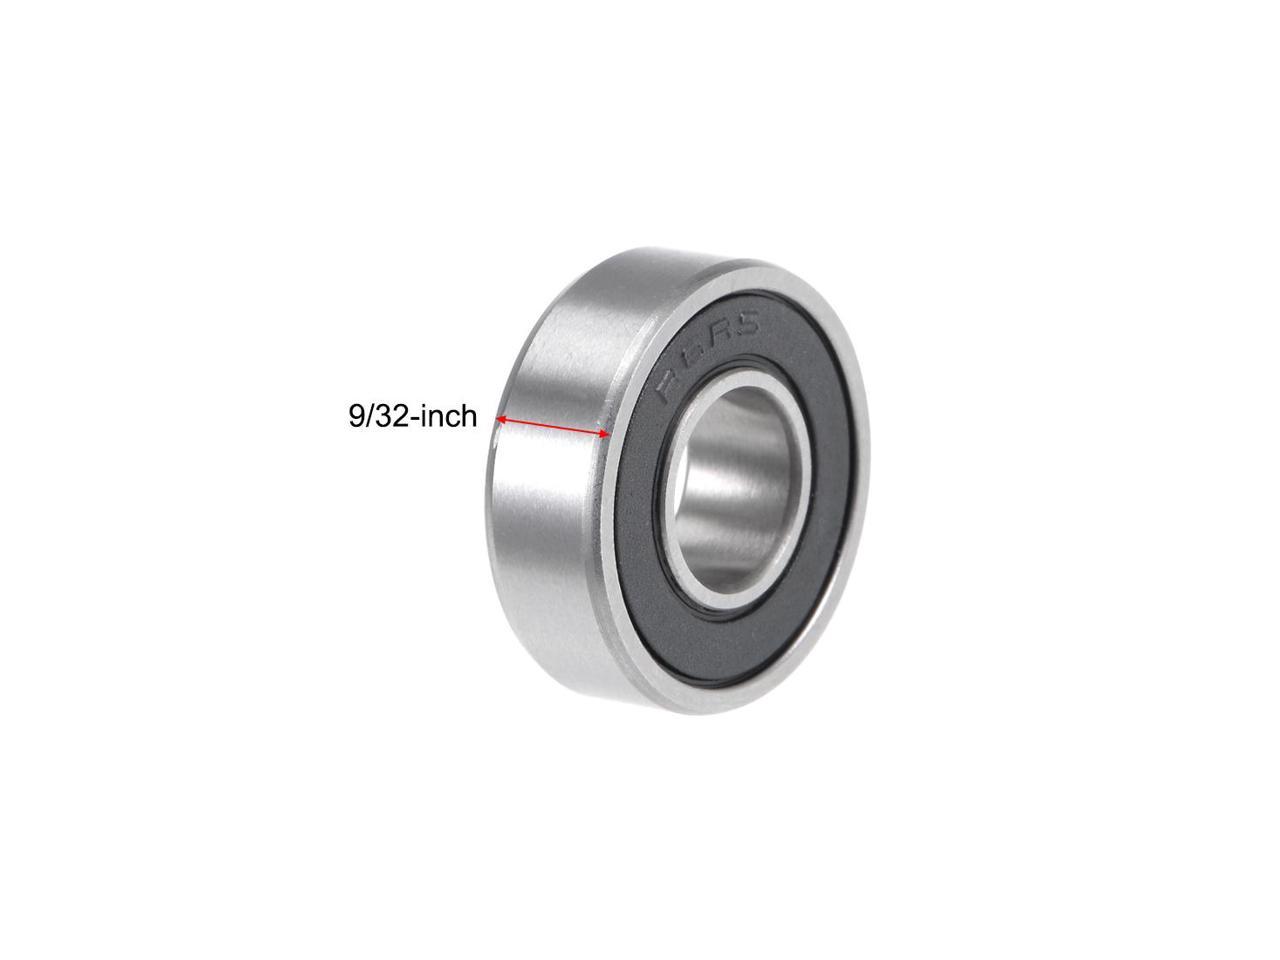 Bearing Balls 3/8-inch Chrome Steel G25 Precision 60-63 HRC 100pcs 